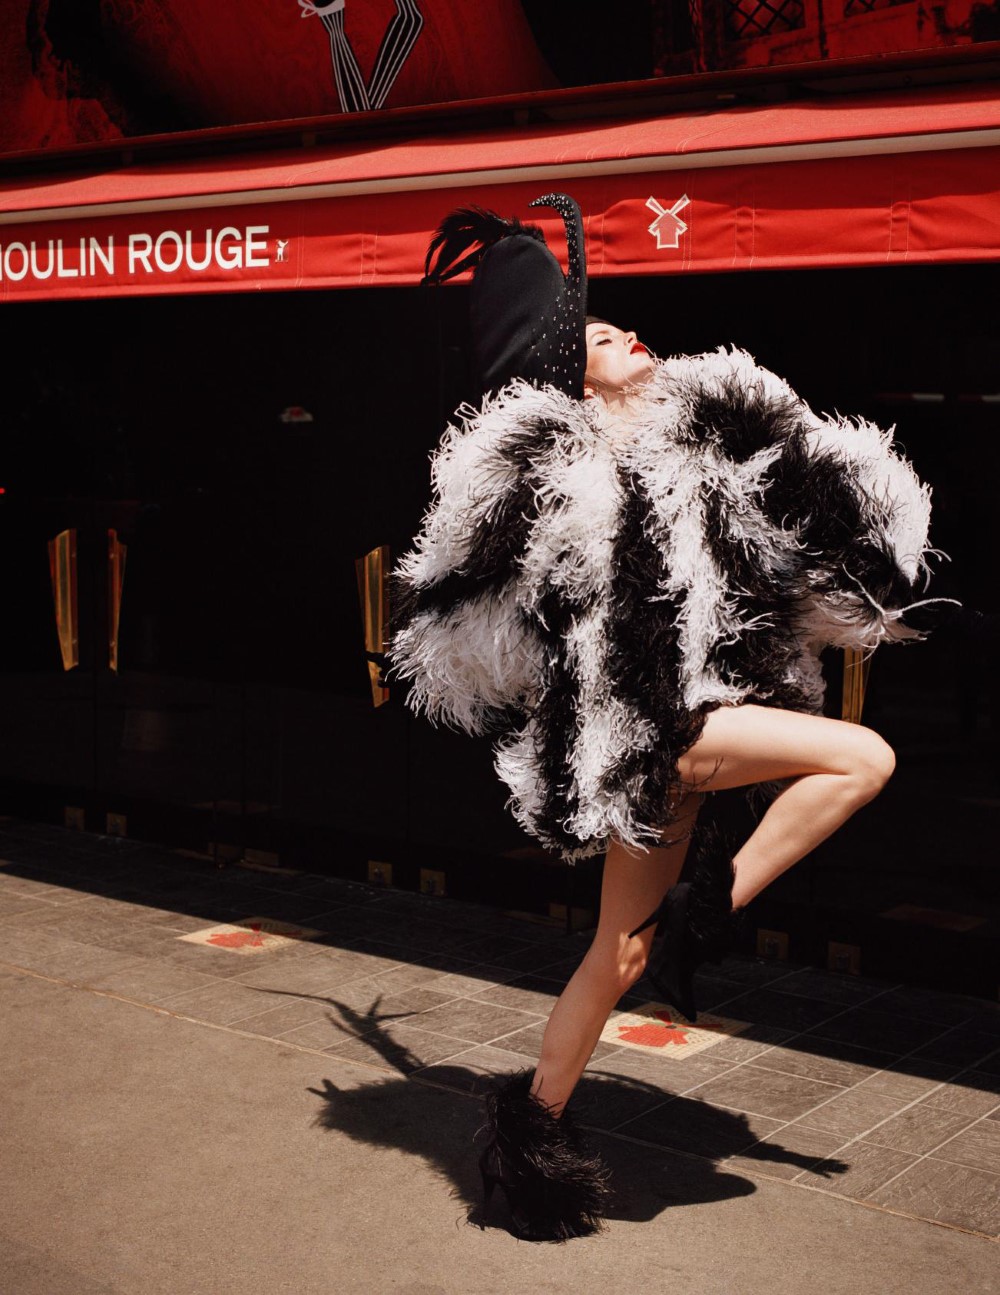 Rianne van Rompaey on four covers of Vogue Paris September 2019